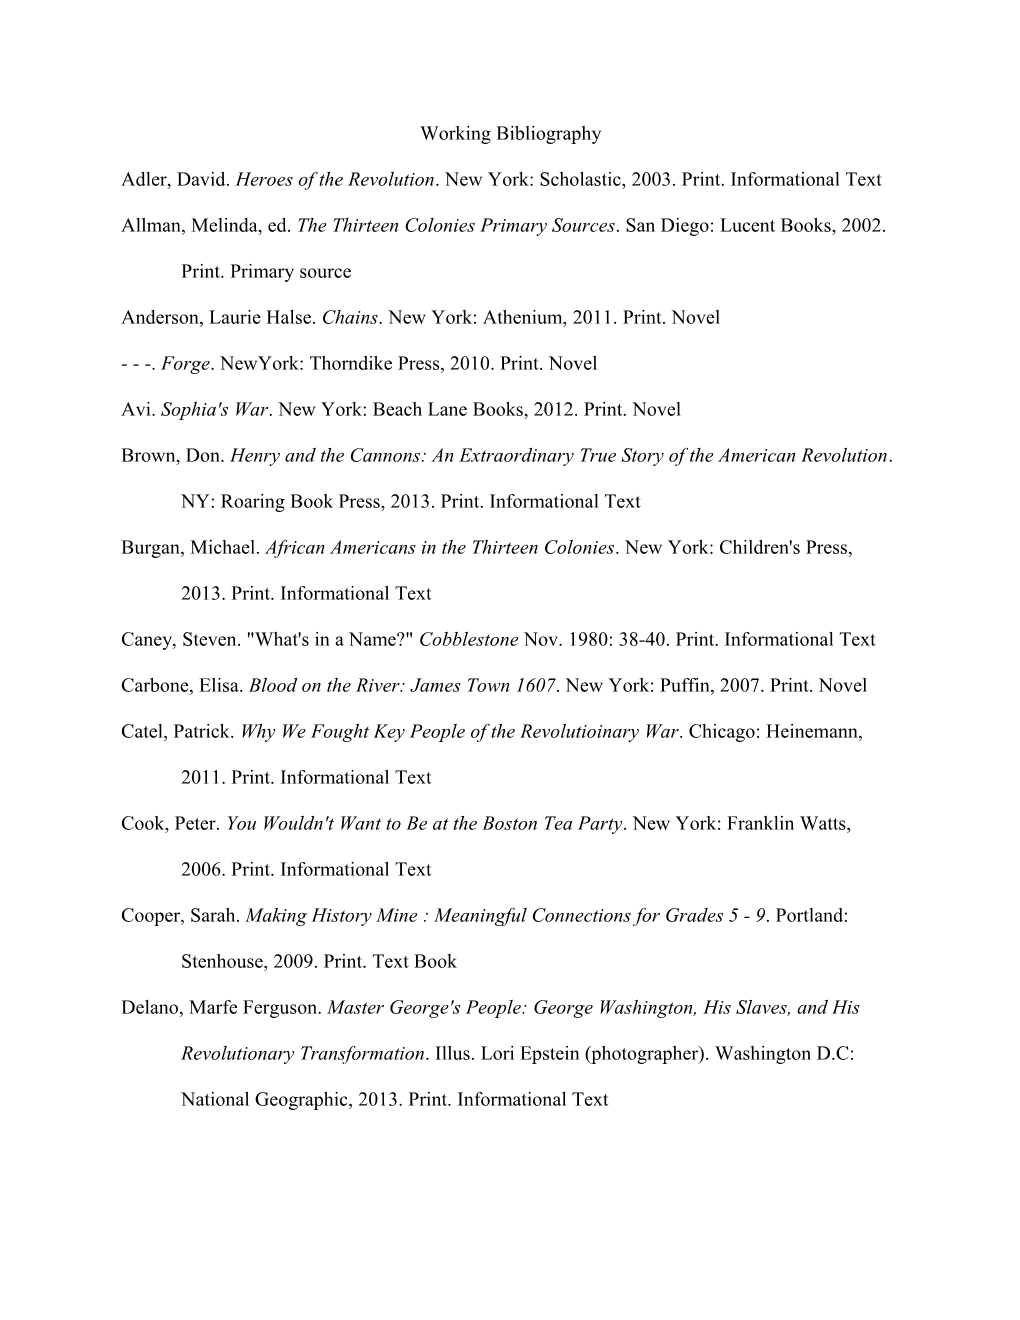 Adler, David. Heroes of the Revolution. New York: Scholastic, 2003. Print. Informational Text